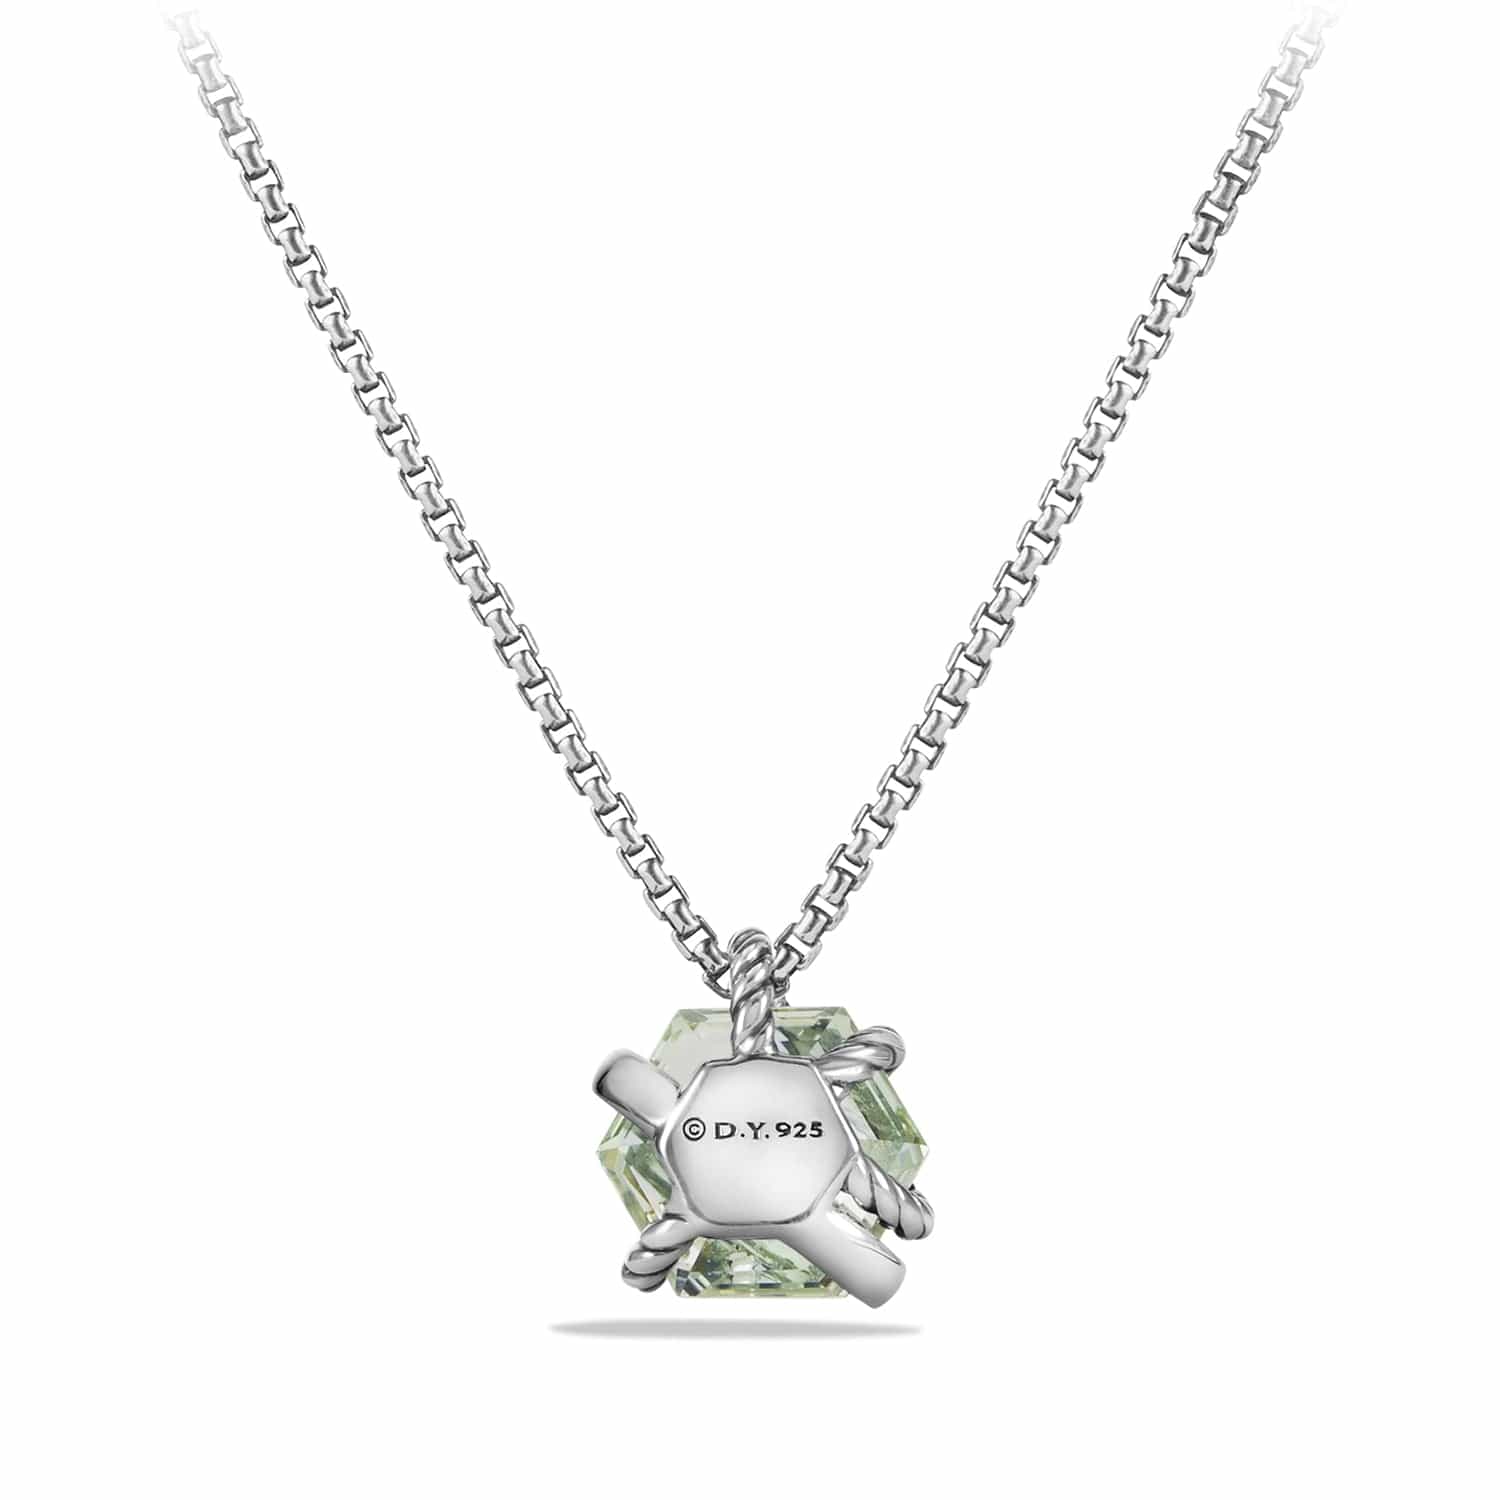 Necklace with Prasiolite and Diamonds